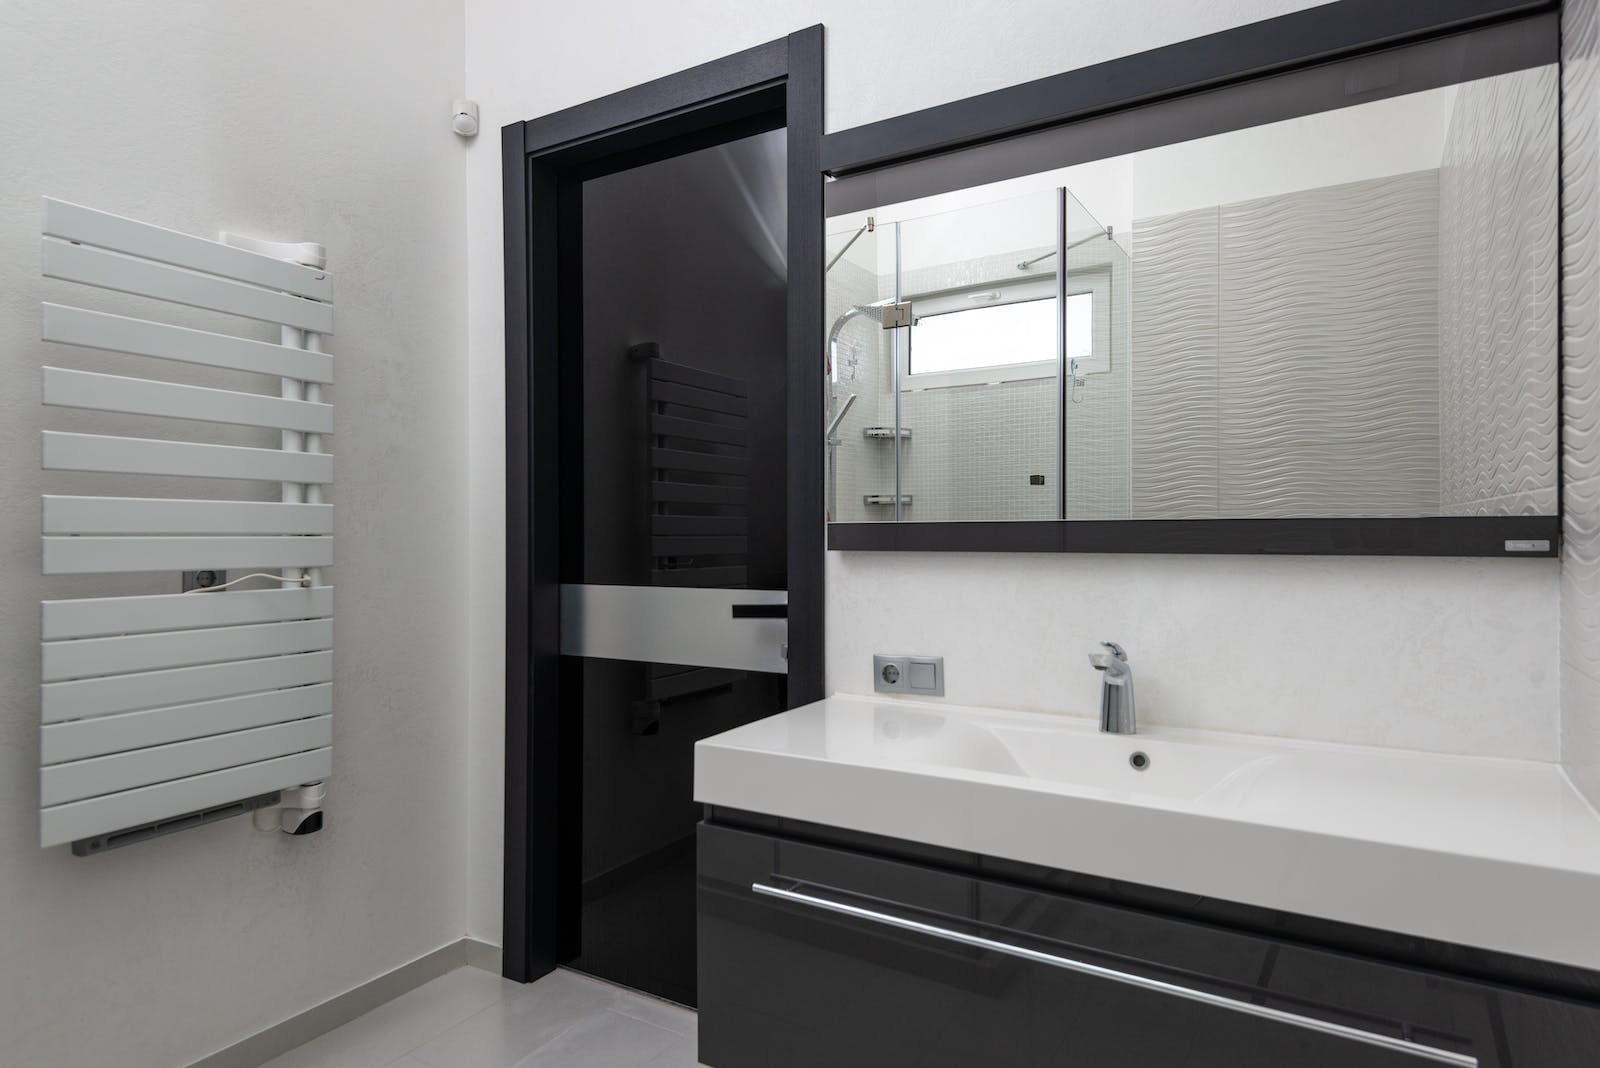 Creative design of bathroom with door between heated towel rail and washstand under rectangular mirror in light house